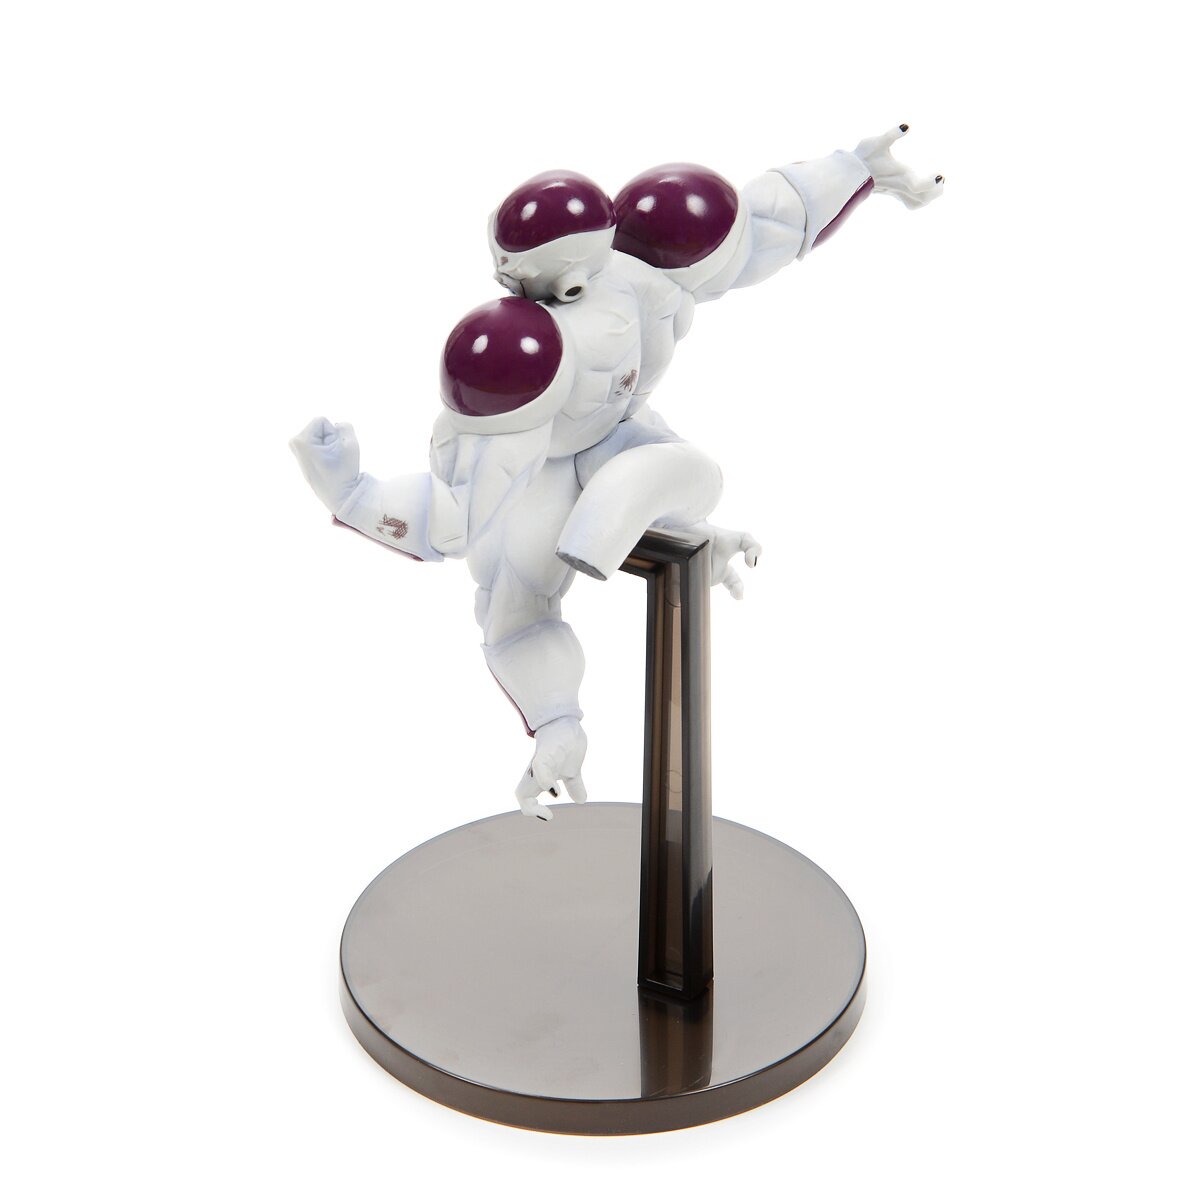 Figurine Match Makers - Dragon Ball Z - Freezer 15 cm - Figurine